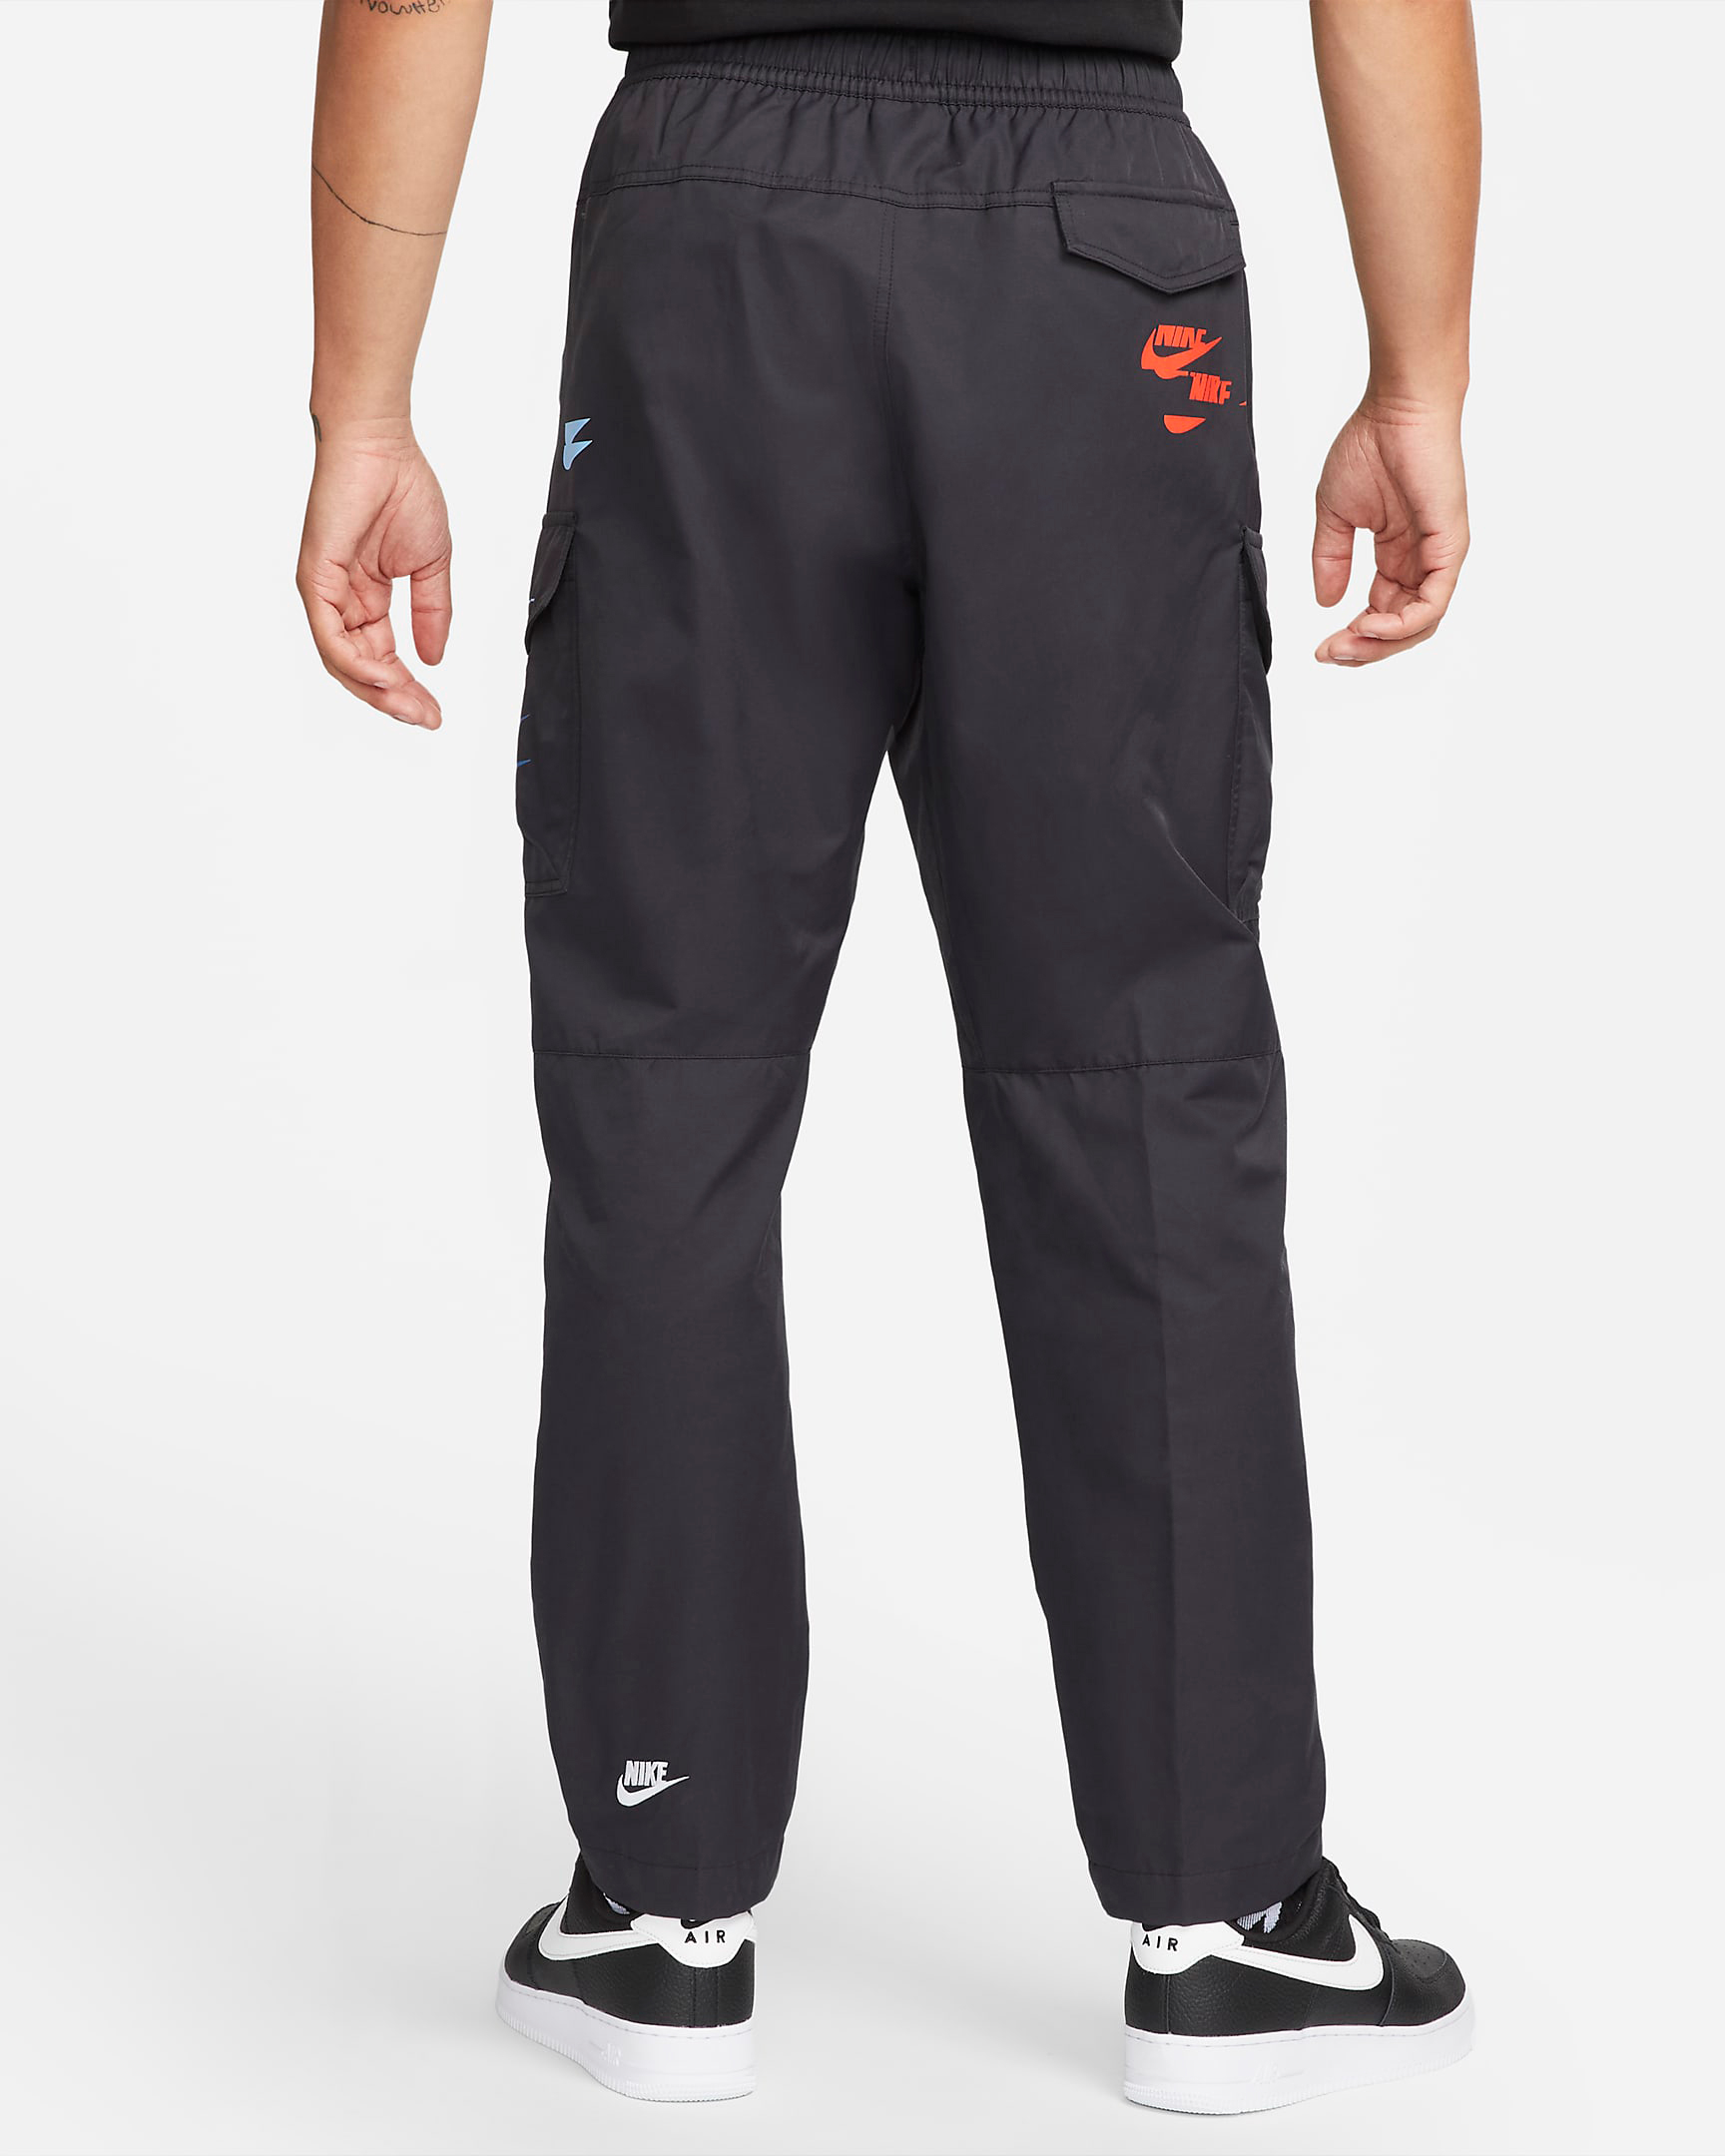 nike-sportswear-sport-essentials-woven-pants-black-dark-marina-blue-red-2